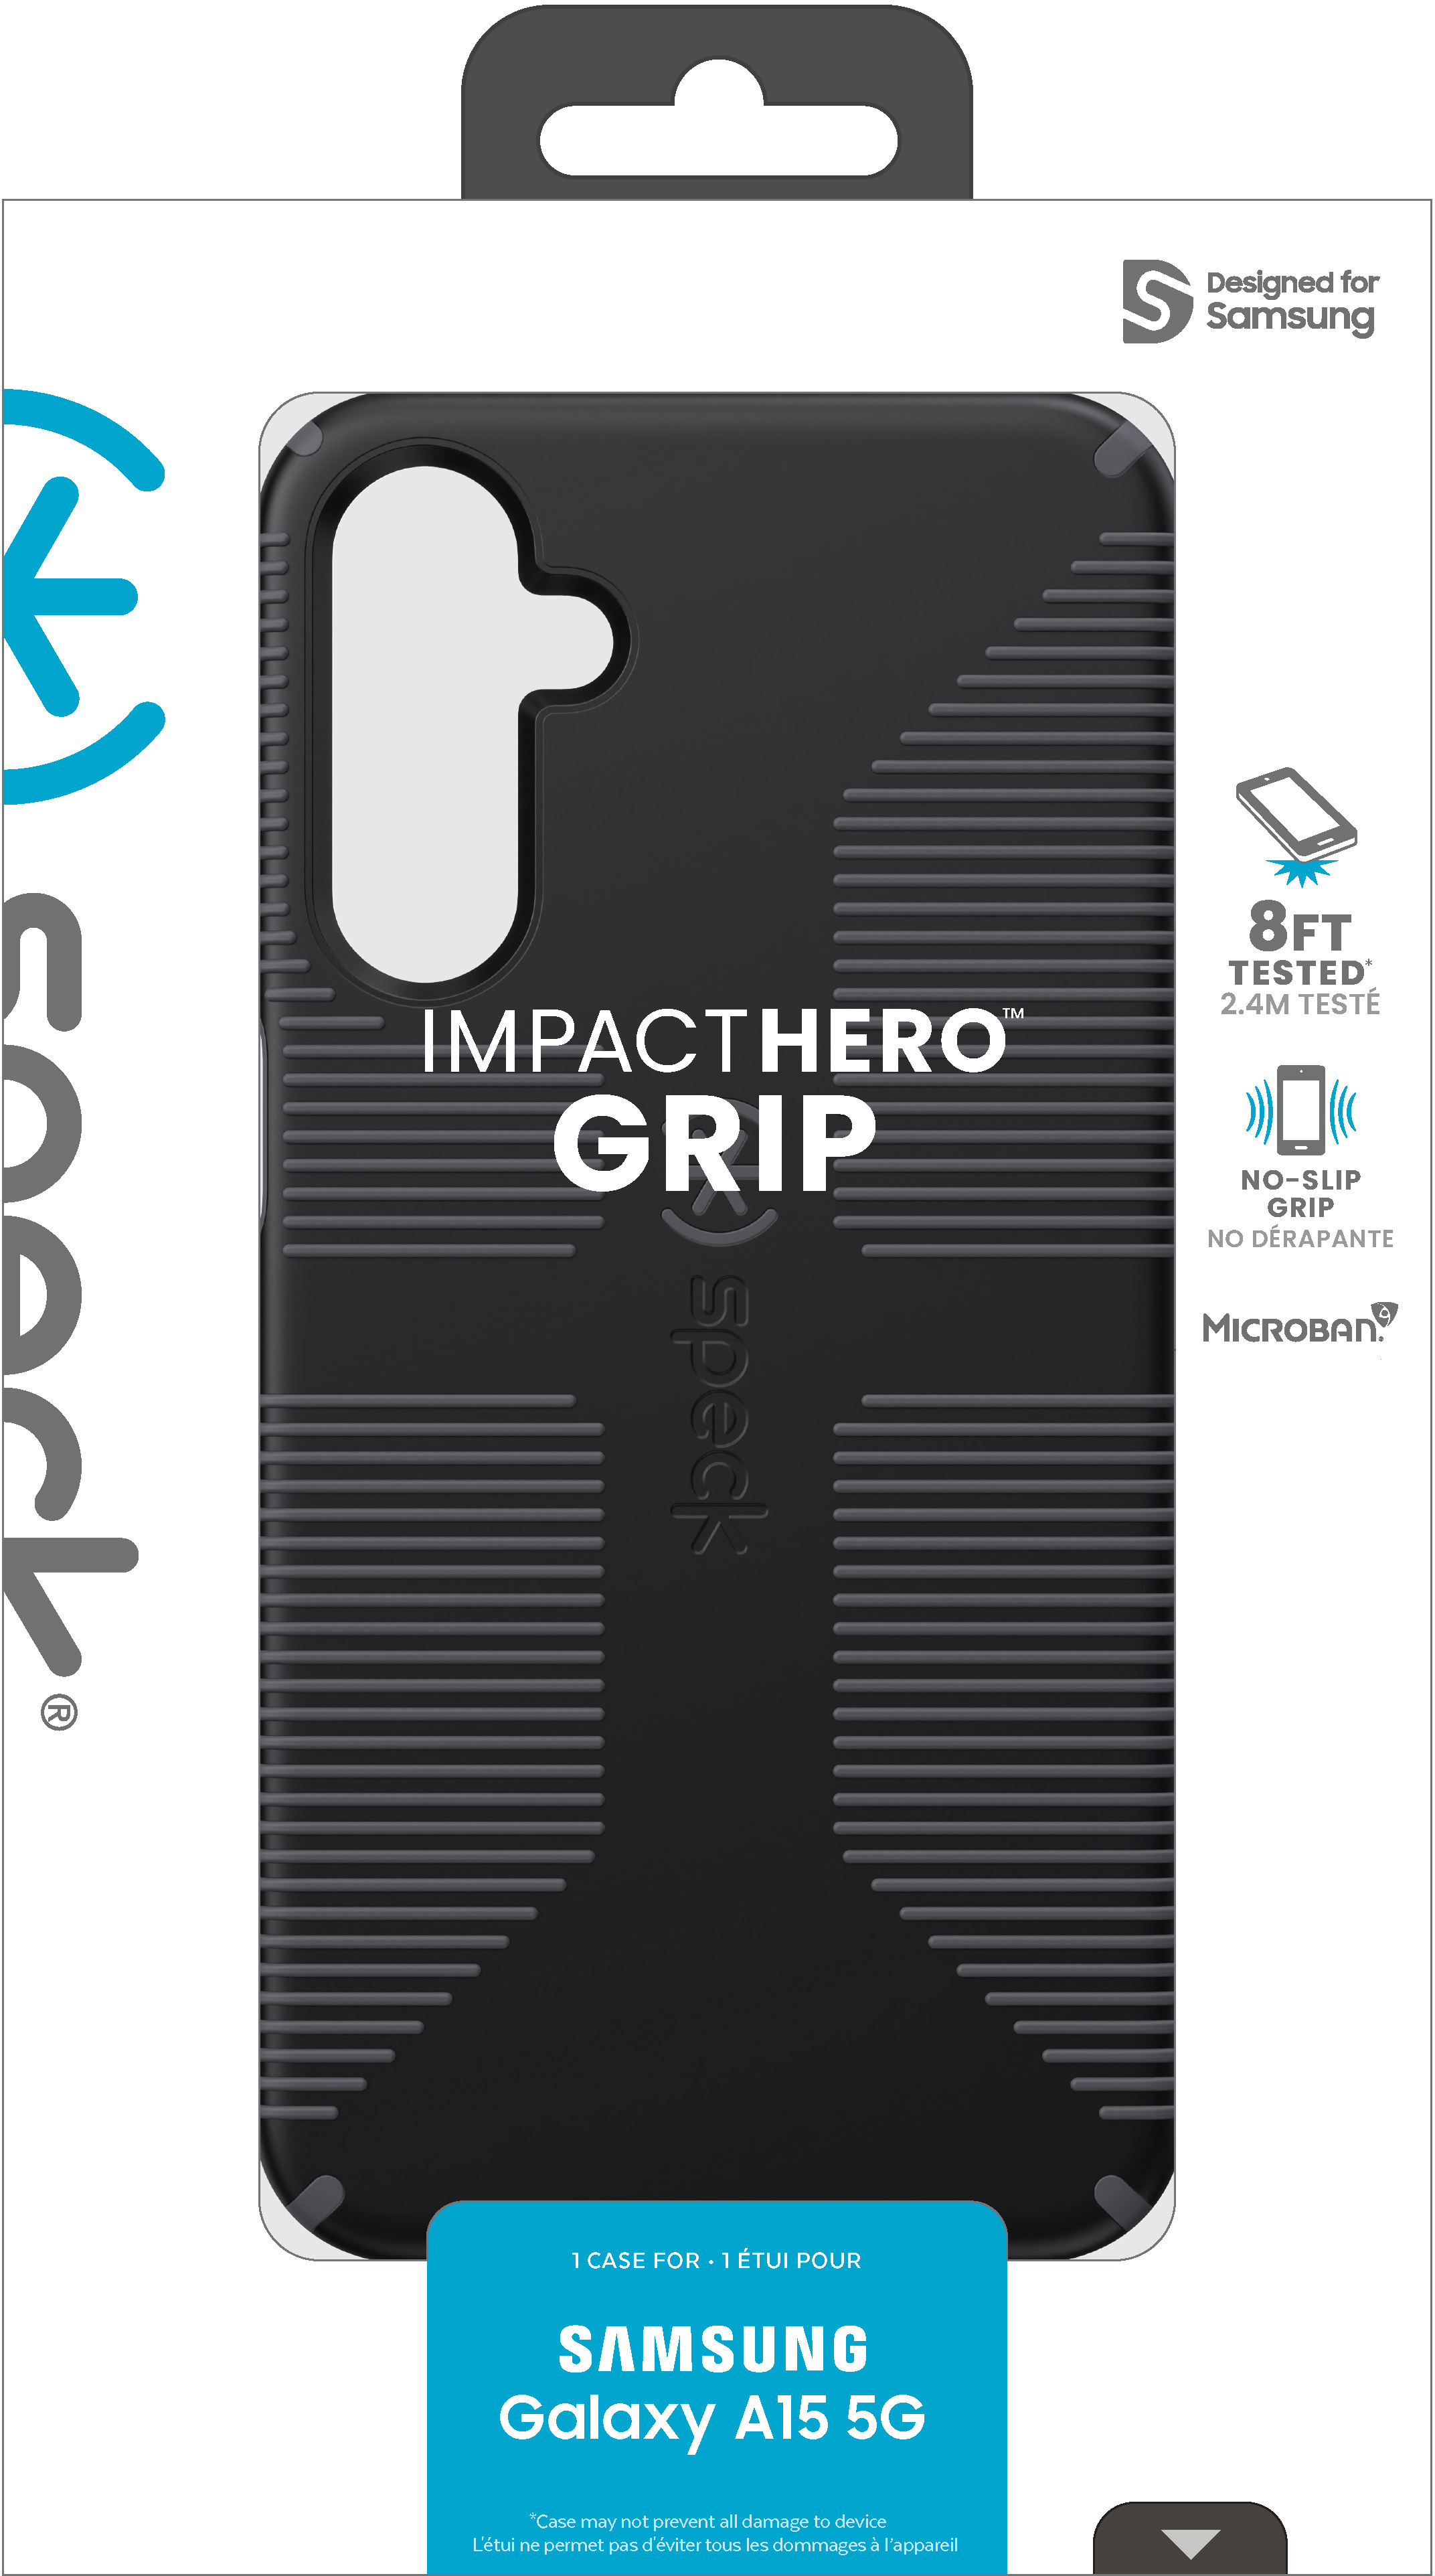 Tas SPECK Impact Hero Grip Samsung Galaxy A15 Black